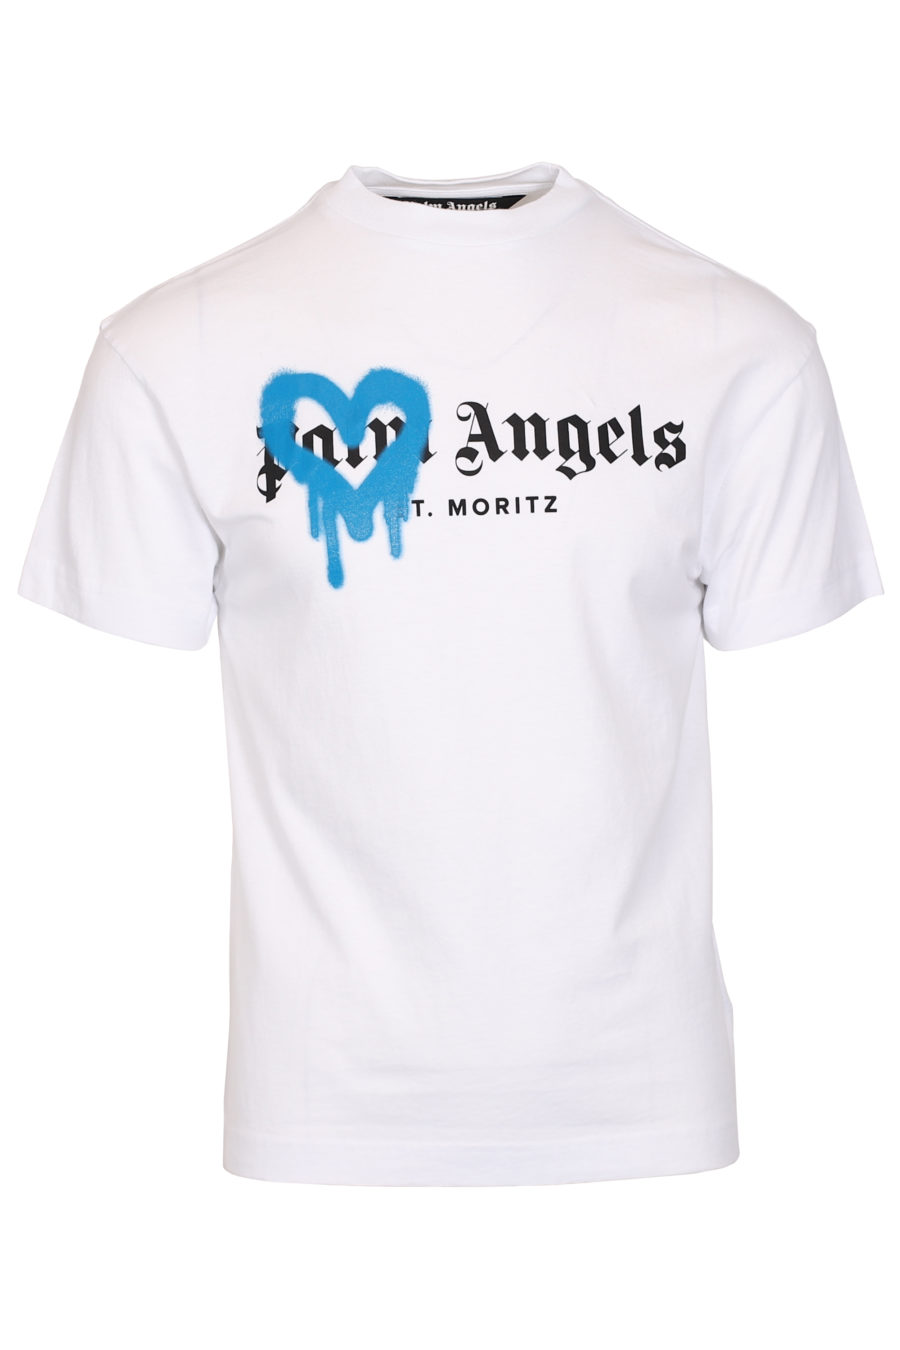 Camiseta blanca logotipo St. Moritz - IMG 1049